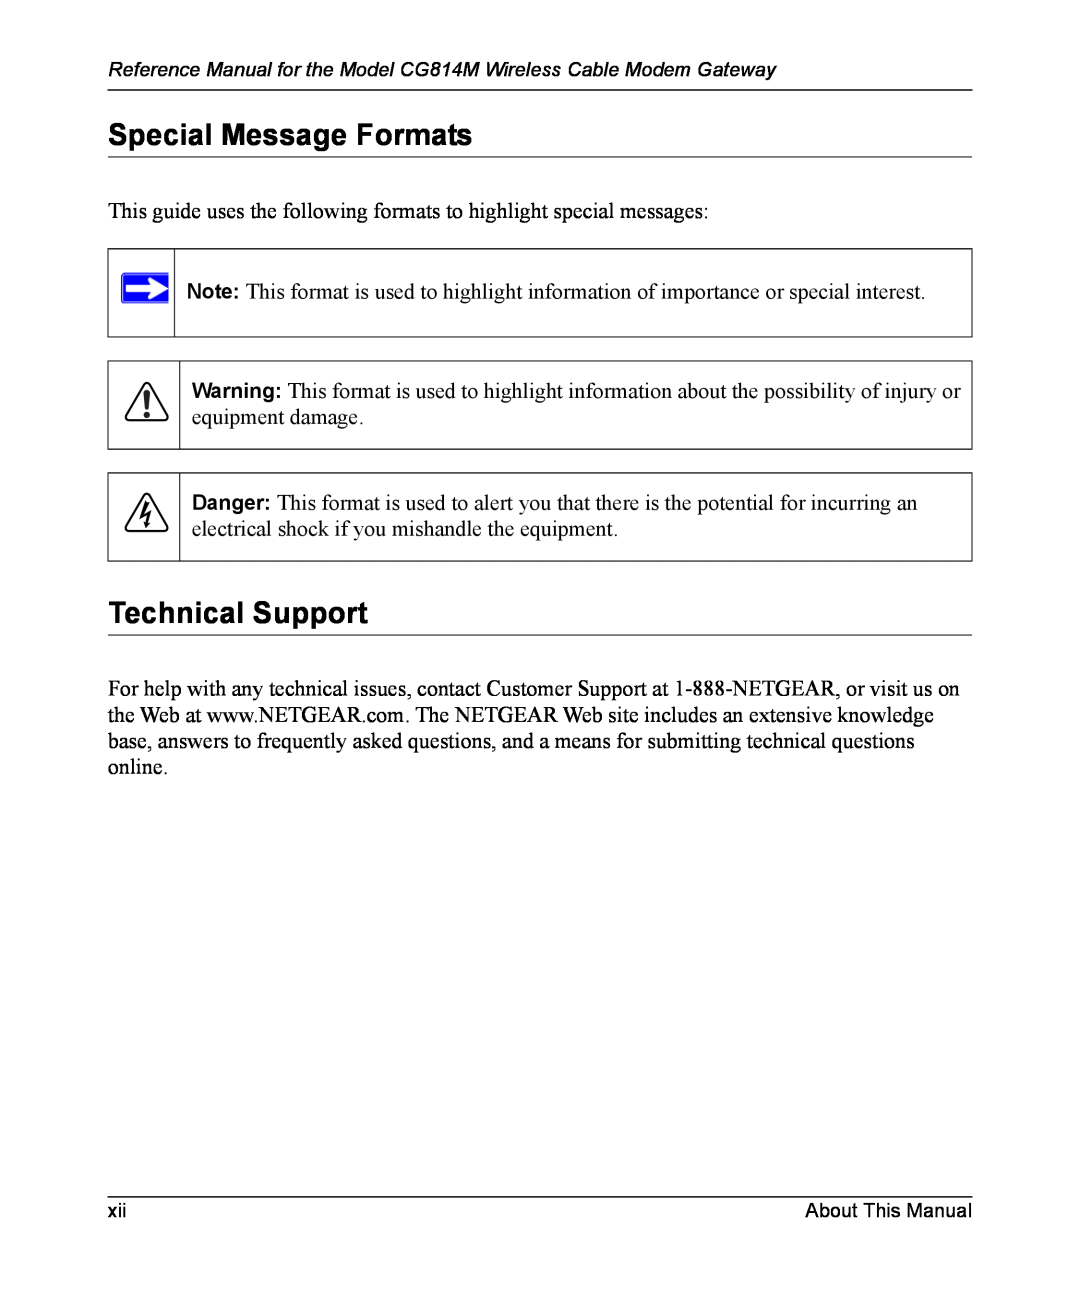 NETGEAR CG814M manual Special Message Formats, Technical Support 